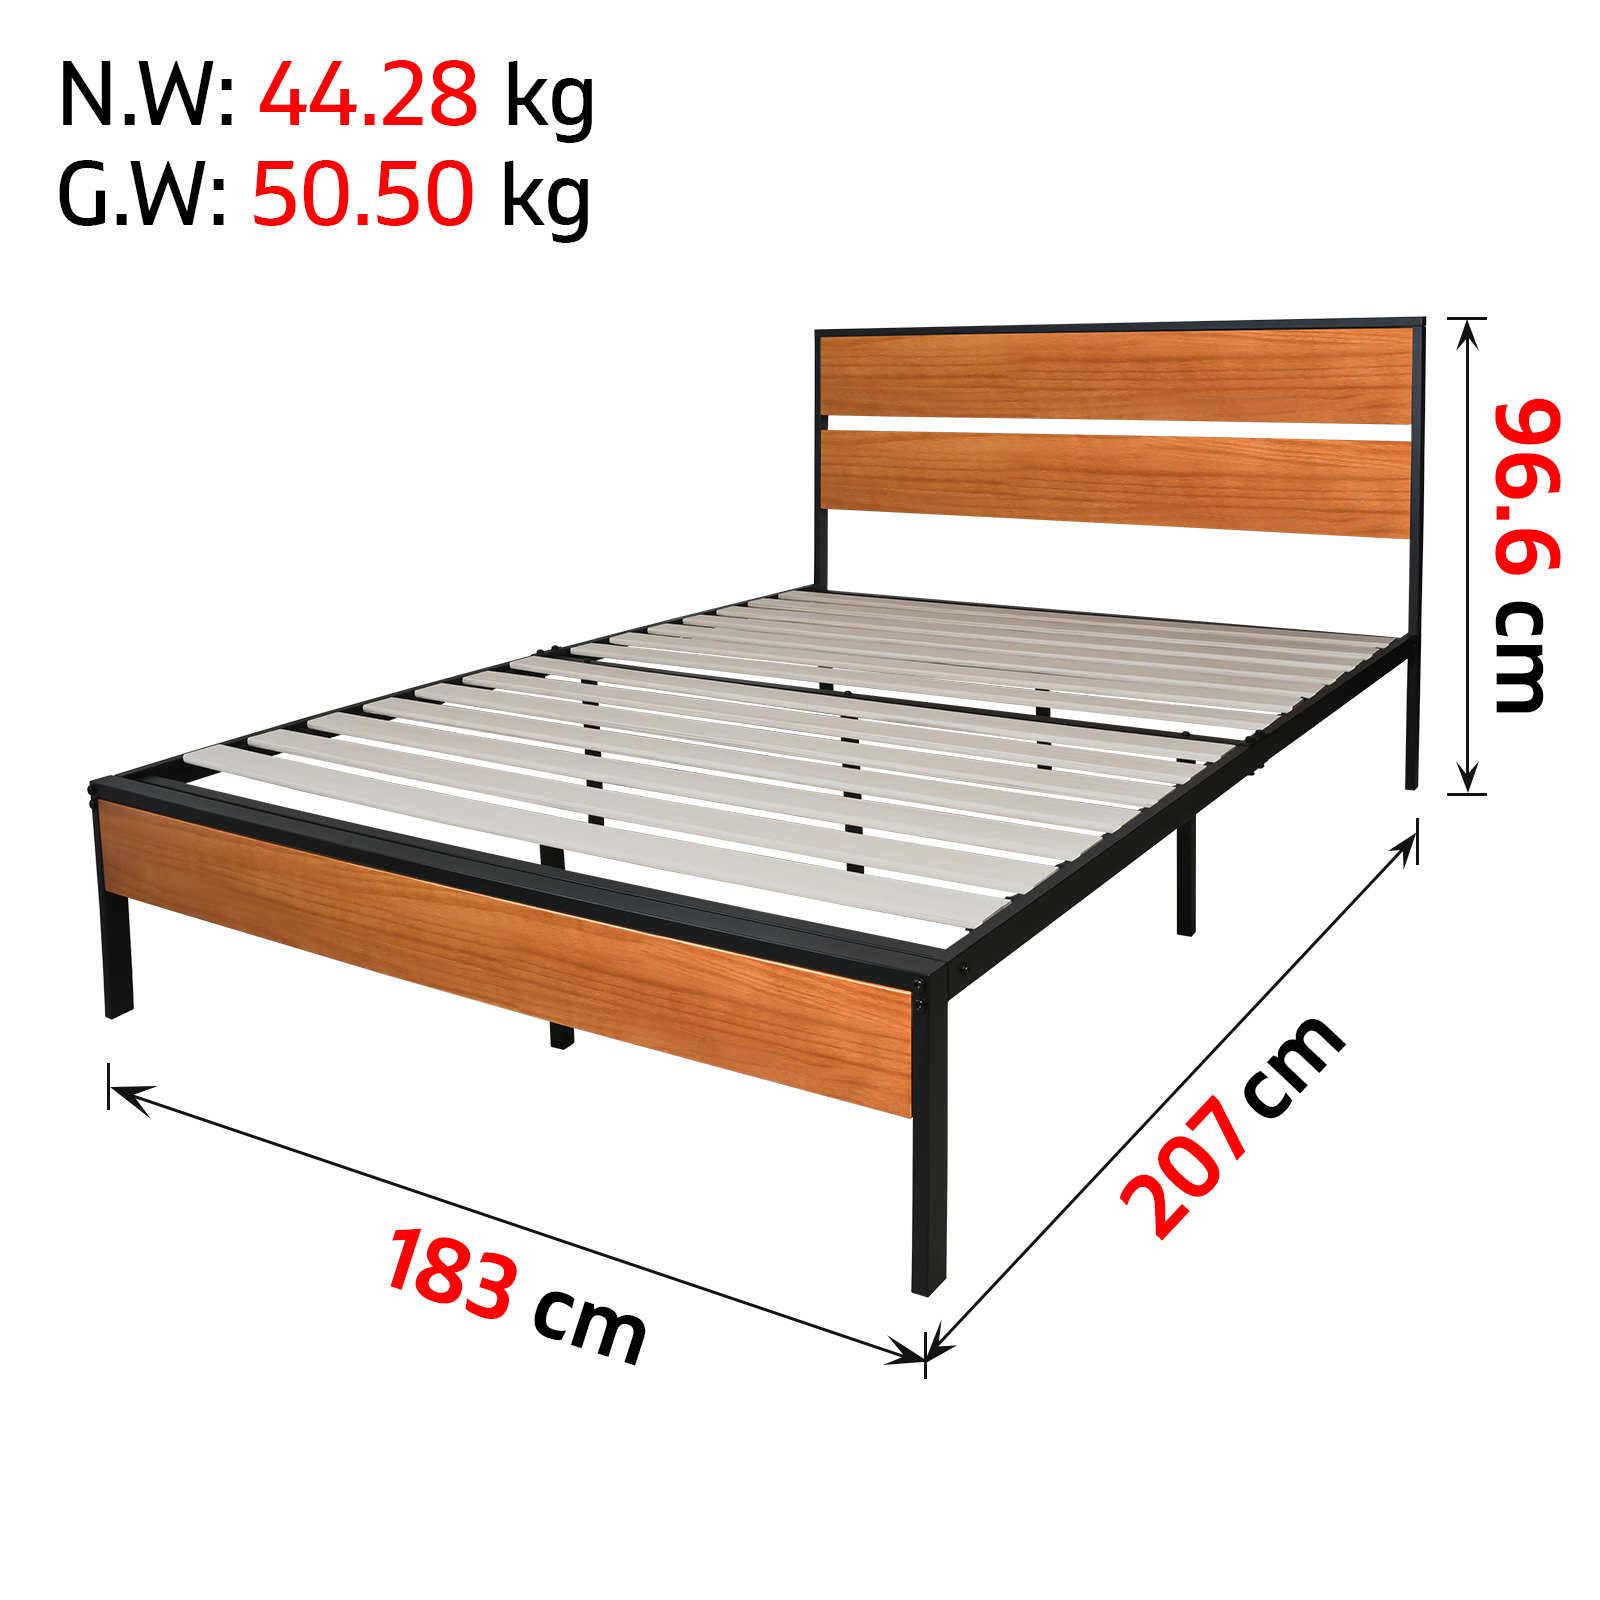 Royal Sleep King Bed Frame Solid Wood & Iron Metal Frame